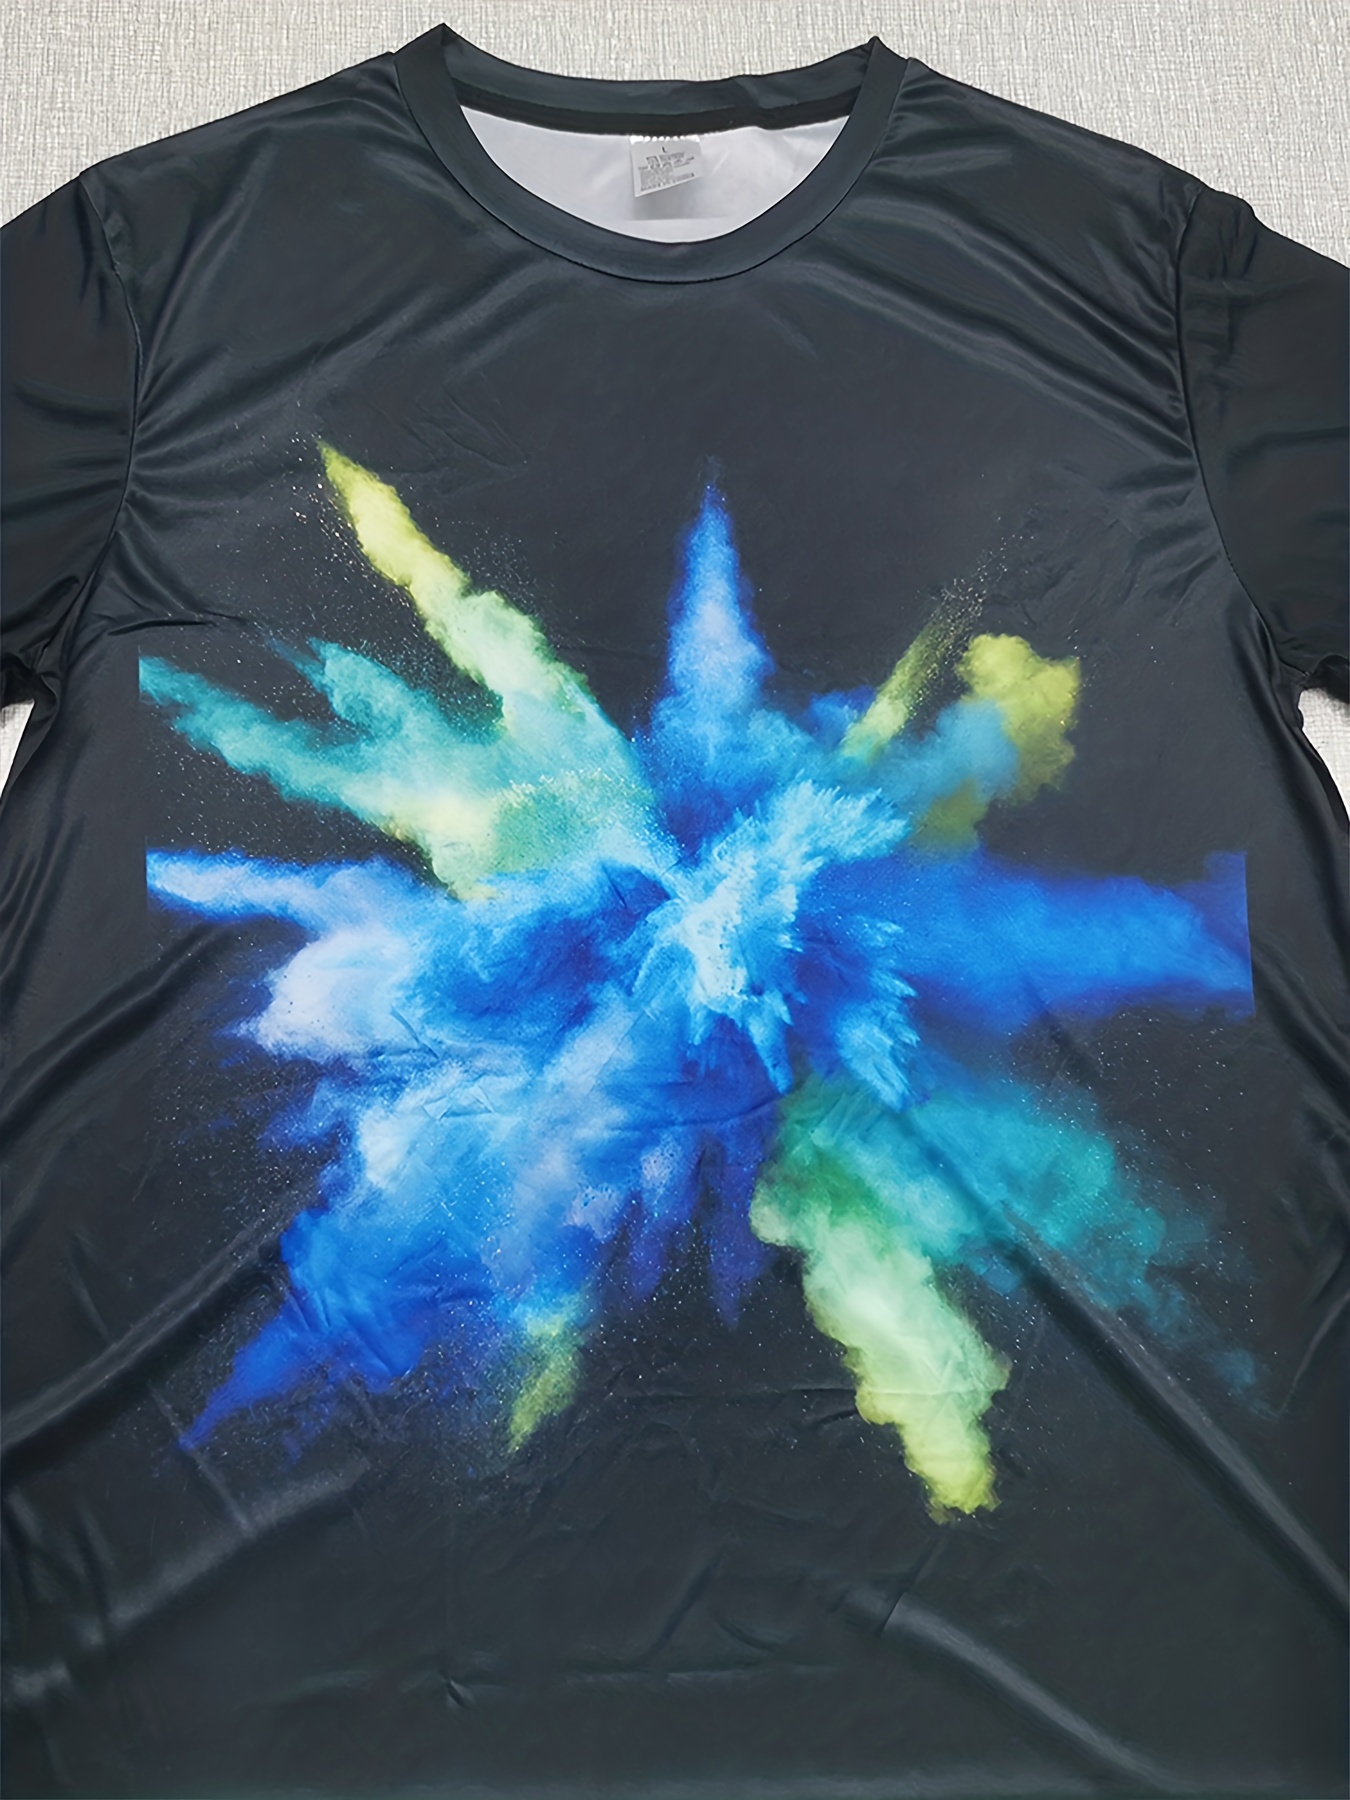 Galaxy 2.0 Unisex Crew  Tie dye shirts patterns, Tie dye outfits, Tie dye  designs